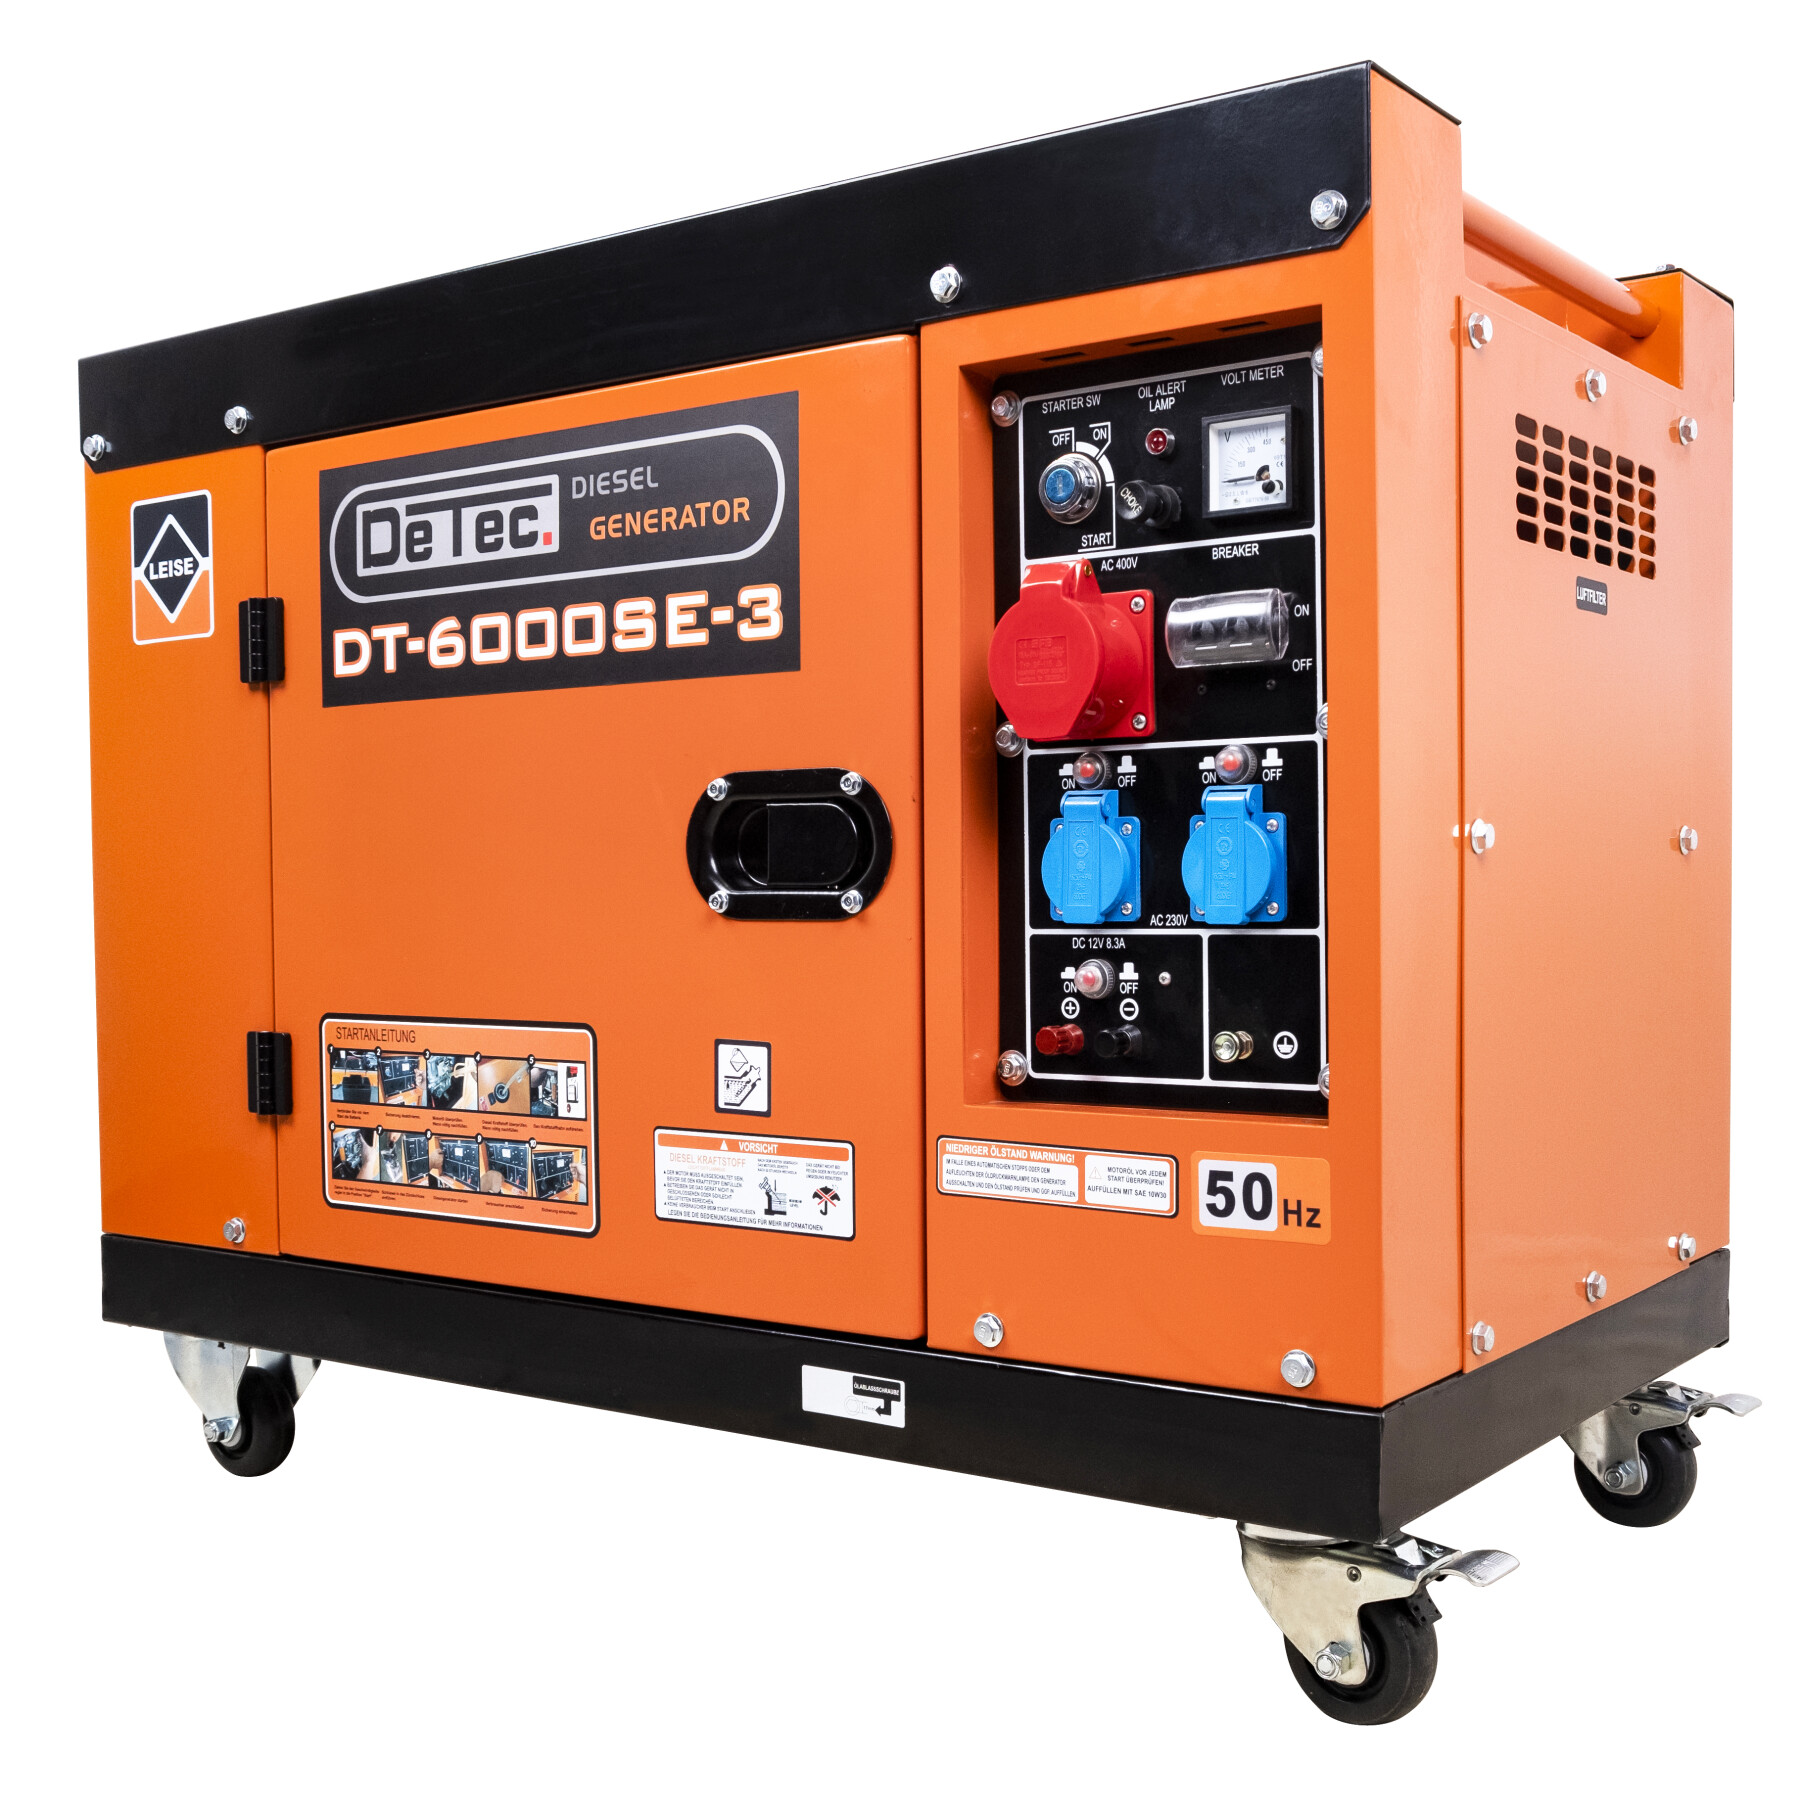 DeTec. DT-6000SE-3 Diesel-Stromerzeuger 5500W 3-Phasen